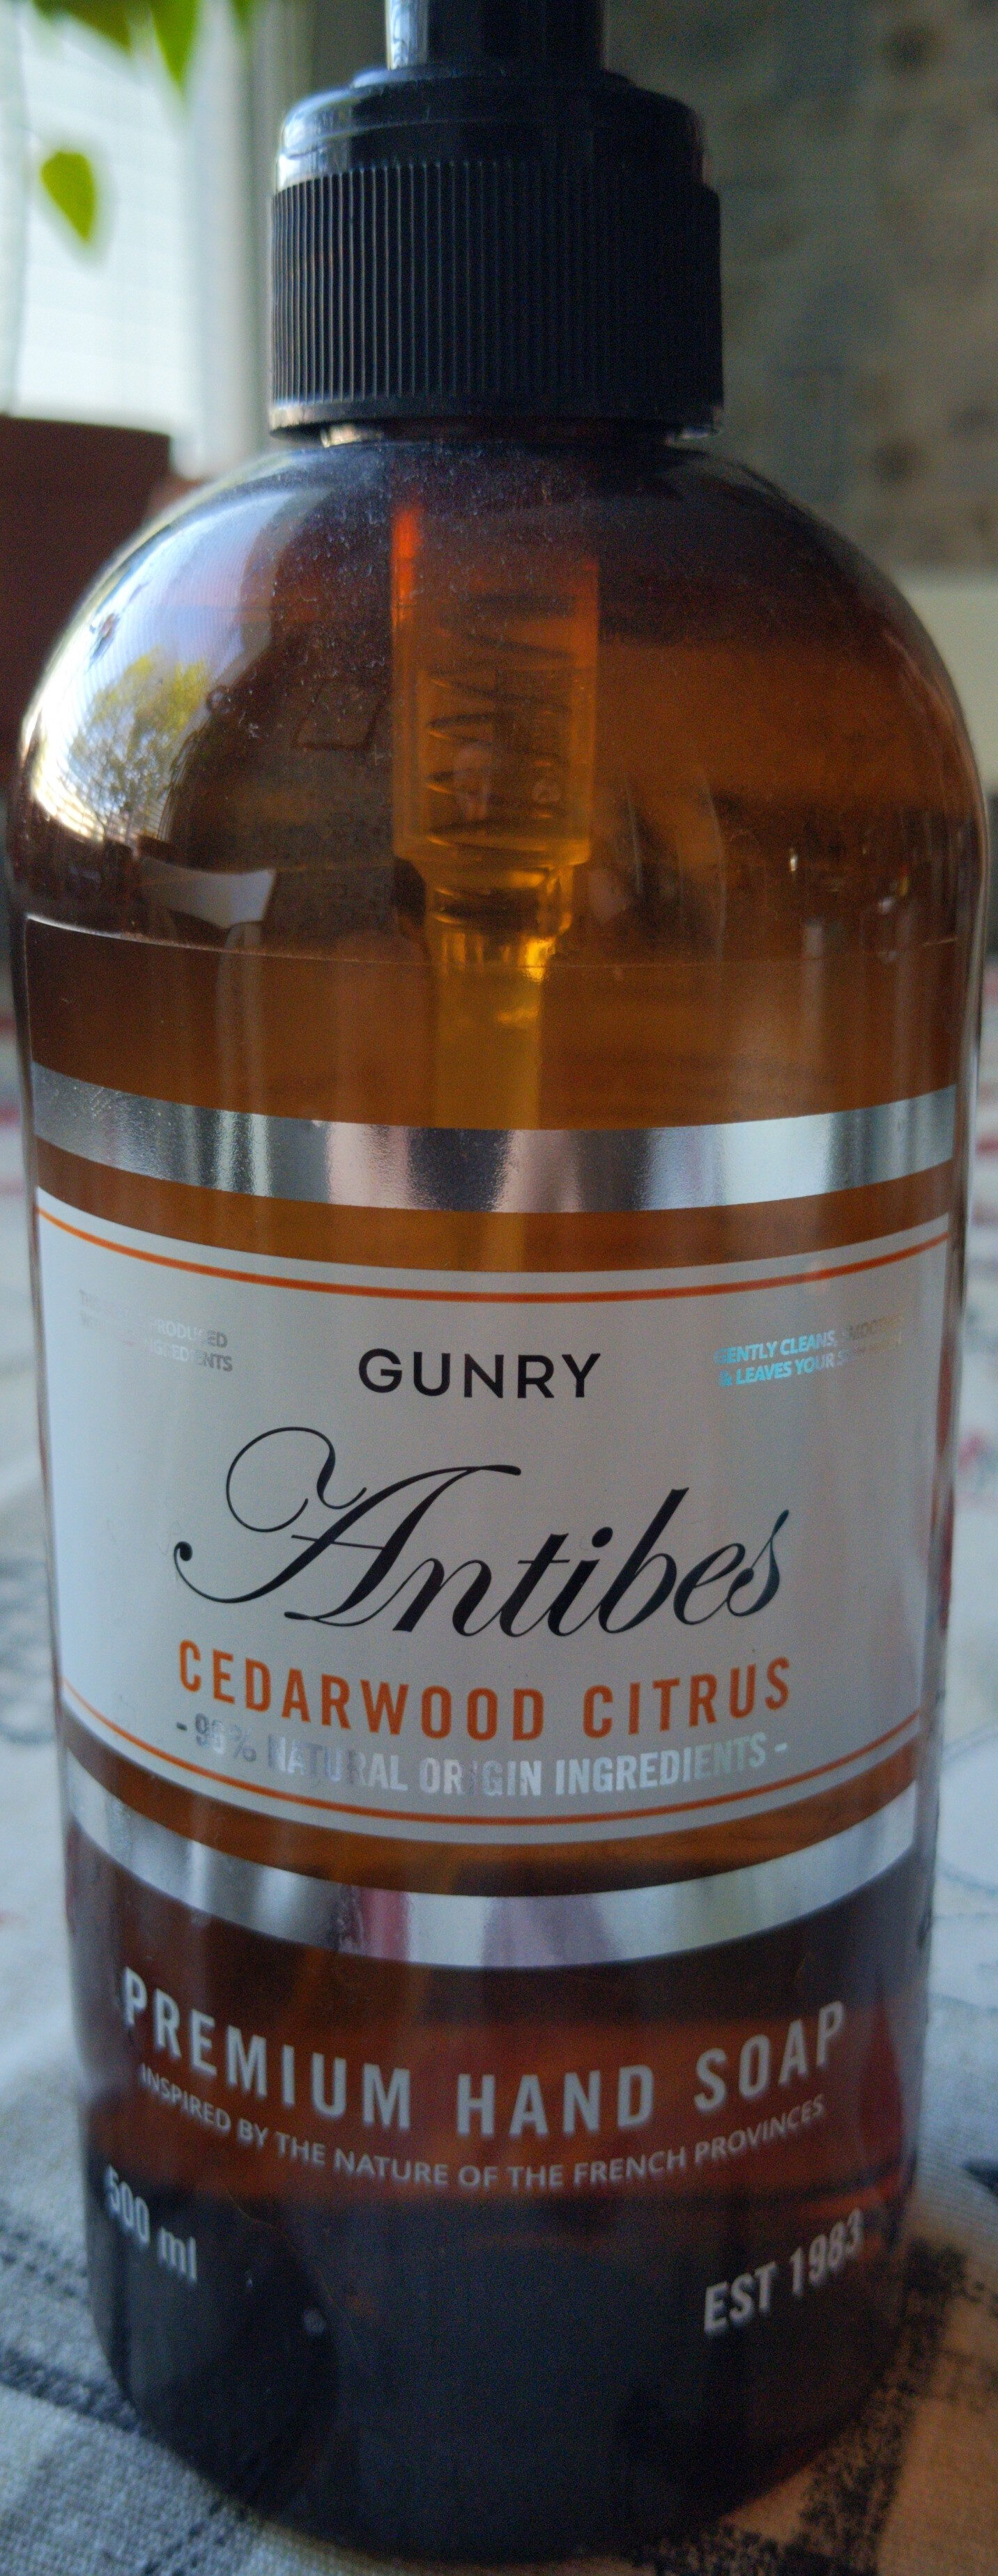 Antibes Cedarwood Citrus - Product - en